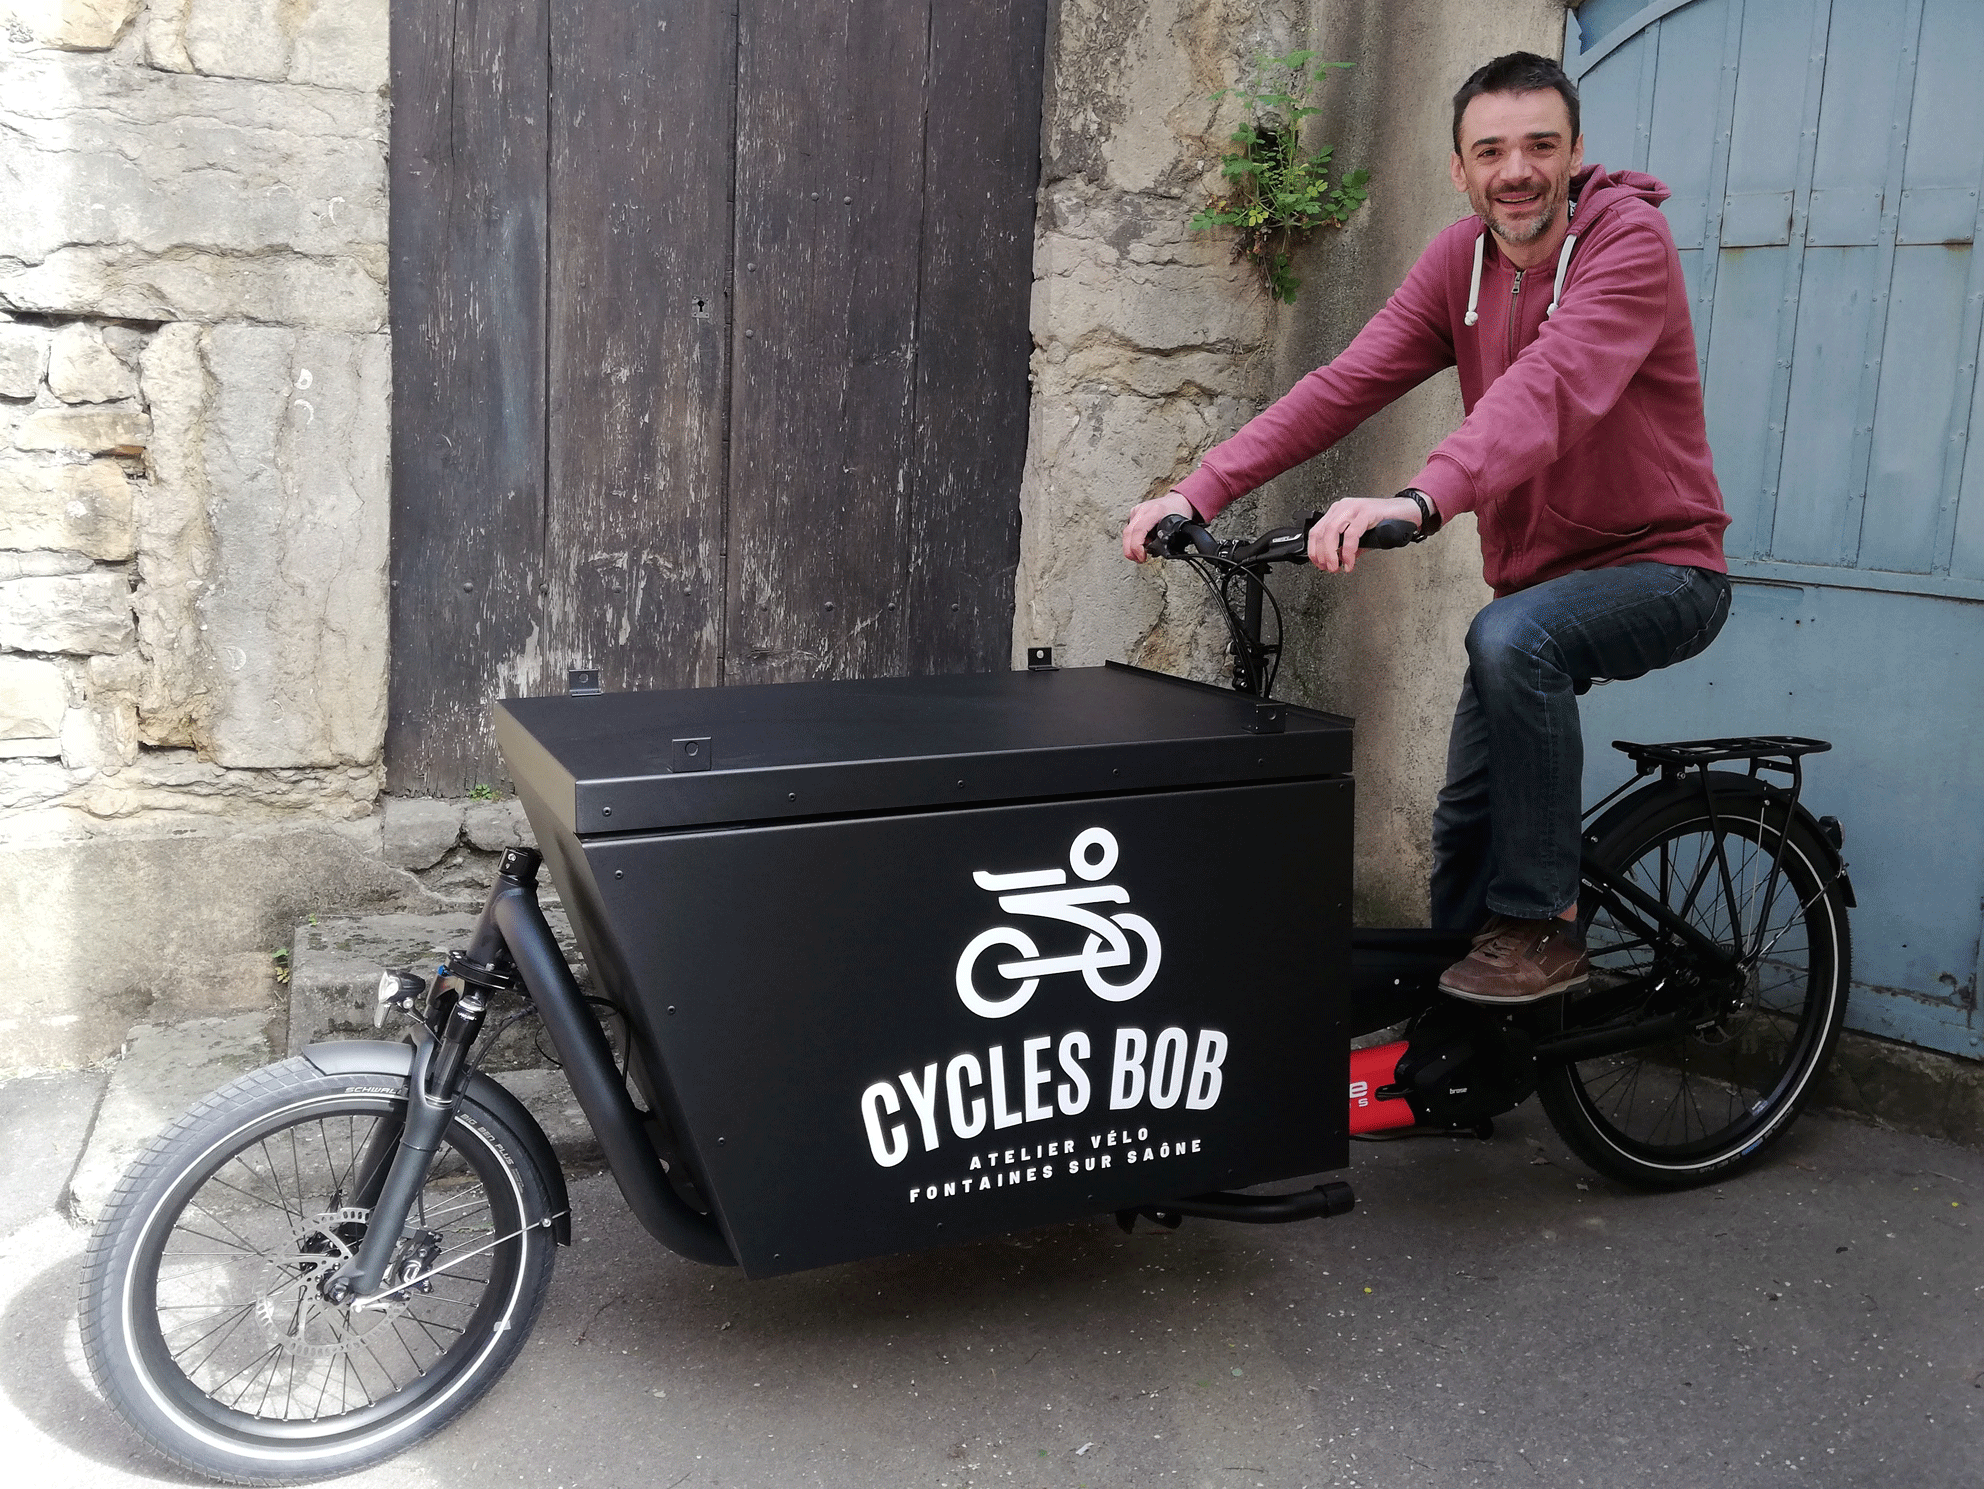 Atelier mobile cycles bob